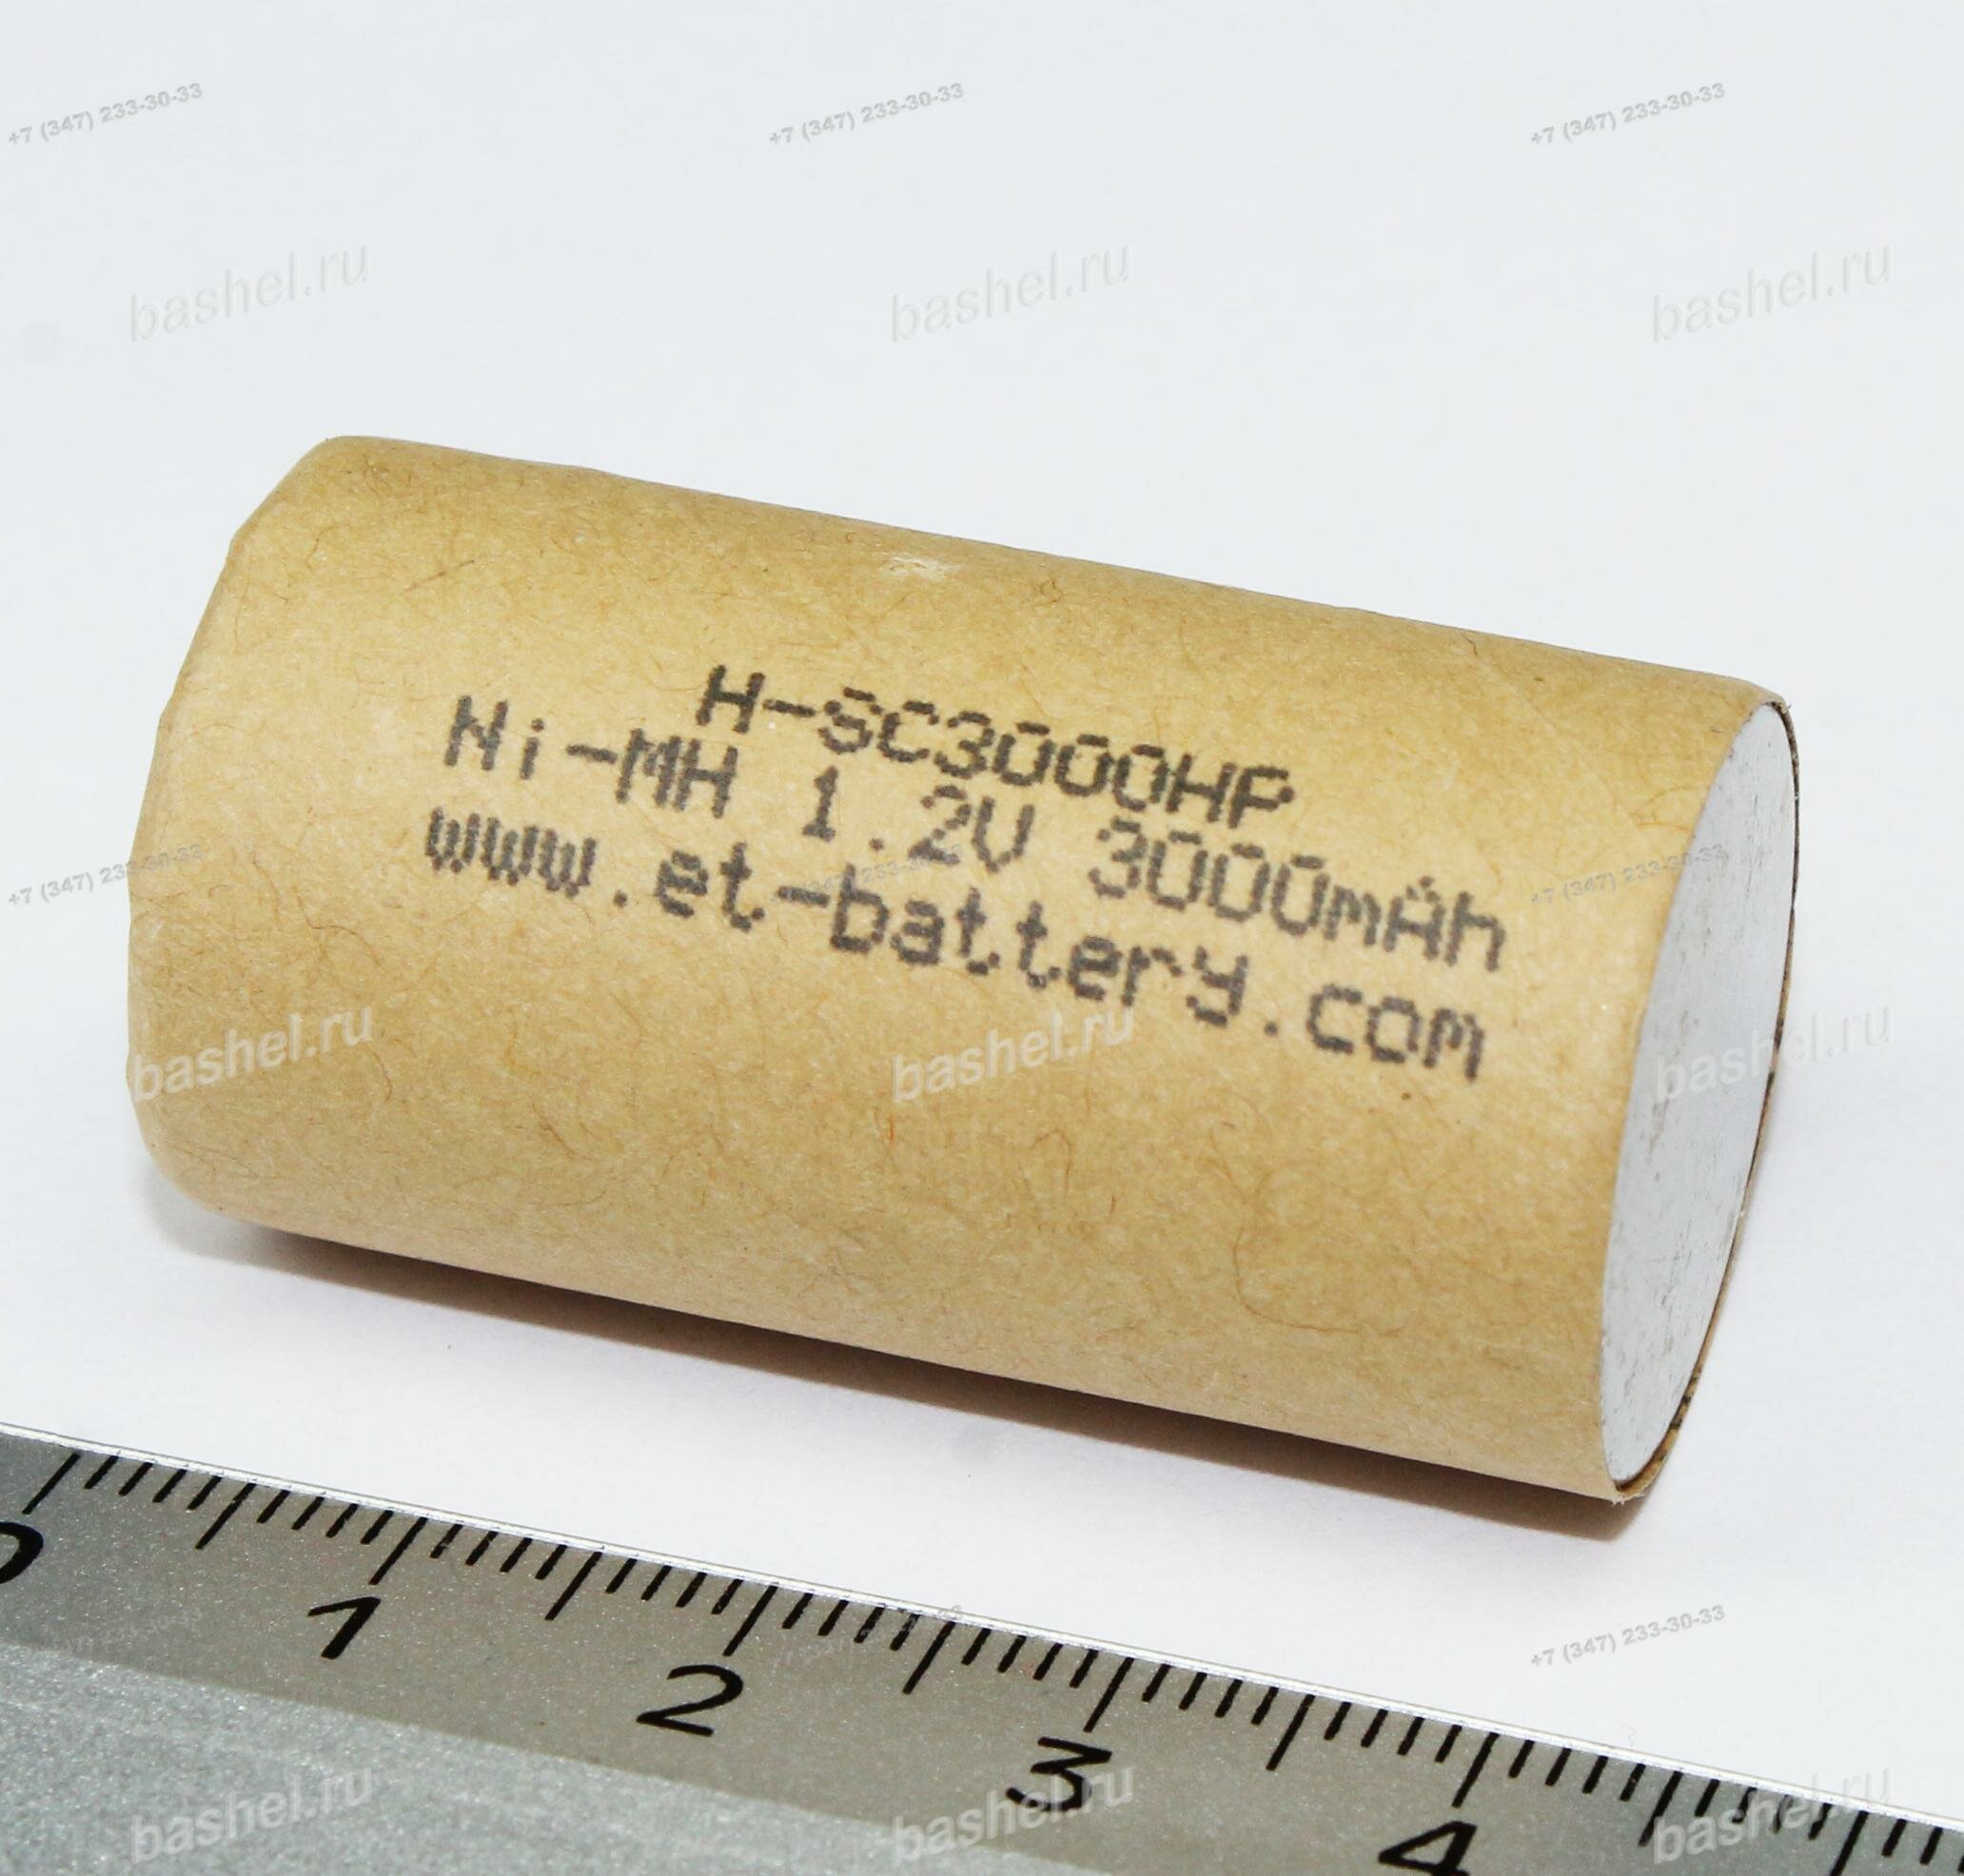 Аккумулятор H-SC3000HP (в картоне) 1,2В, 3000mAh NiMH (23/43)